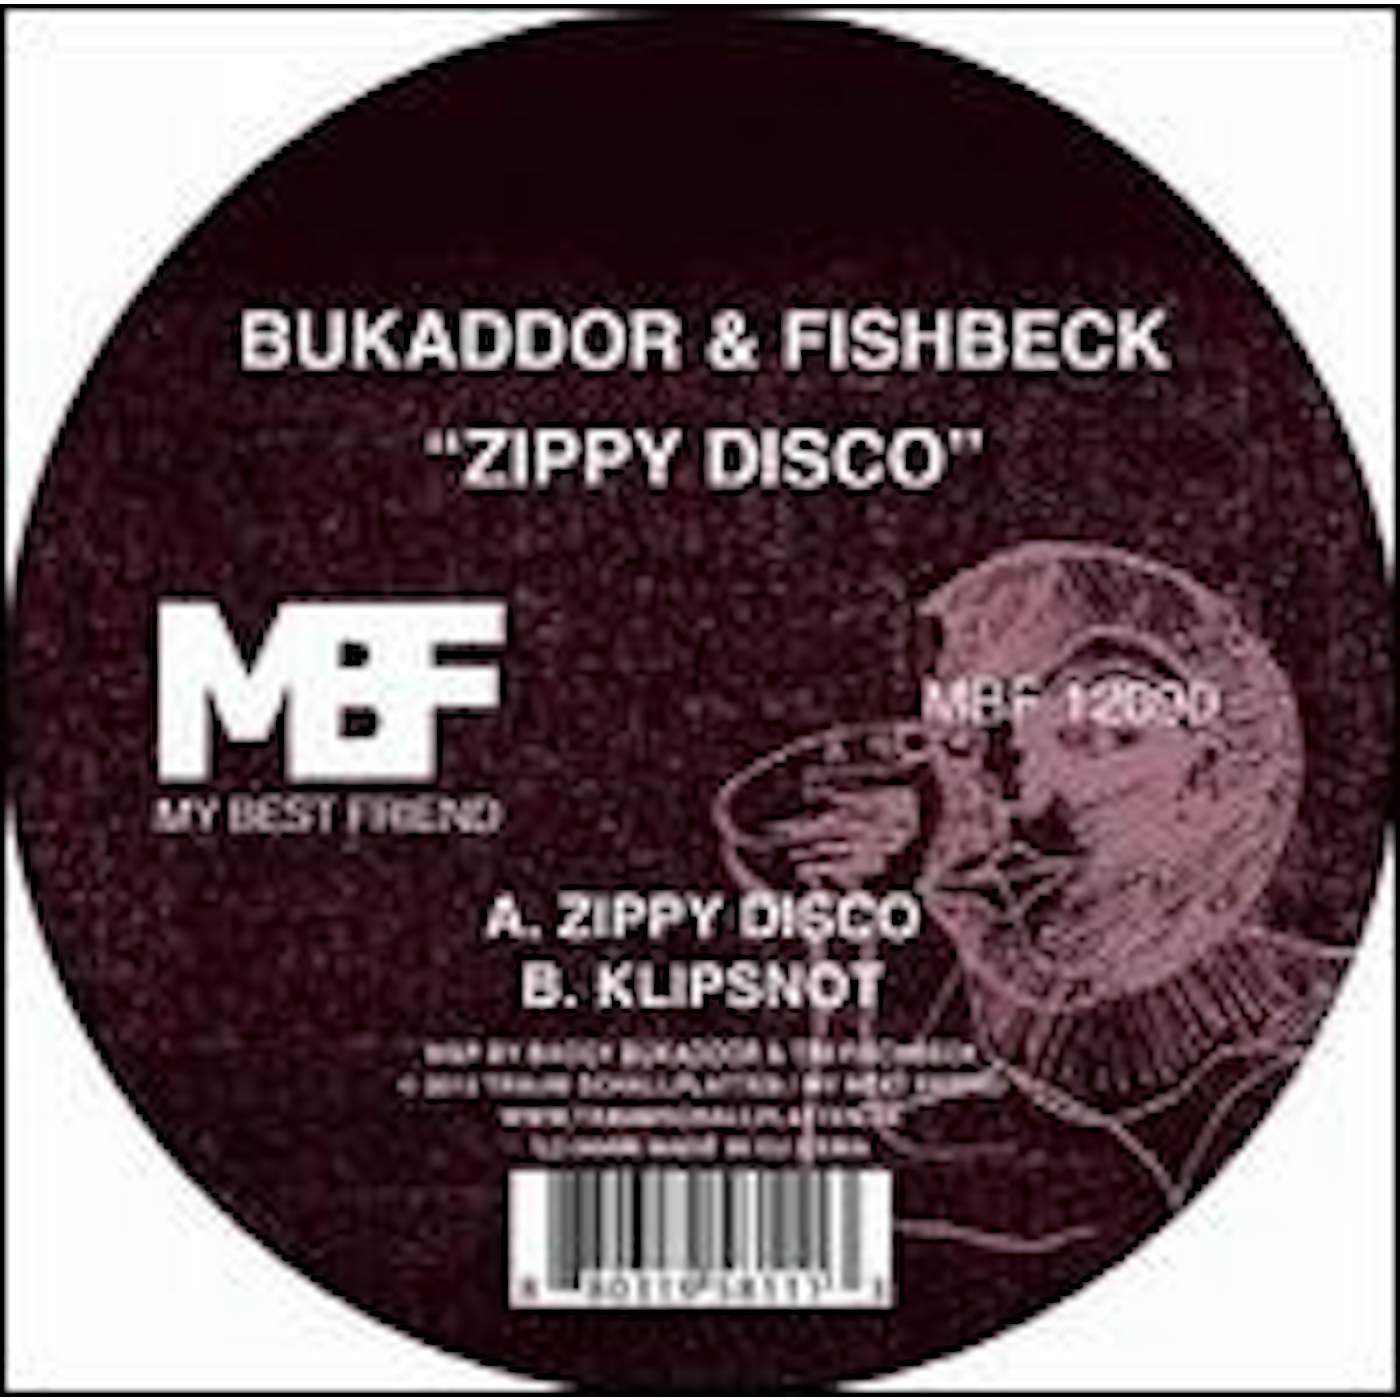 Bukaddor & Fishbeck Zippy Disco Vinyl Record